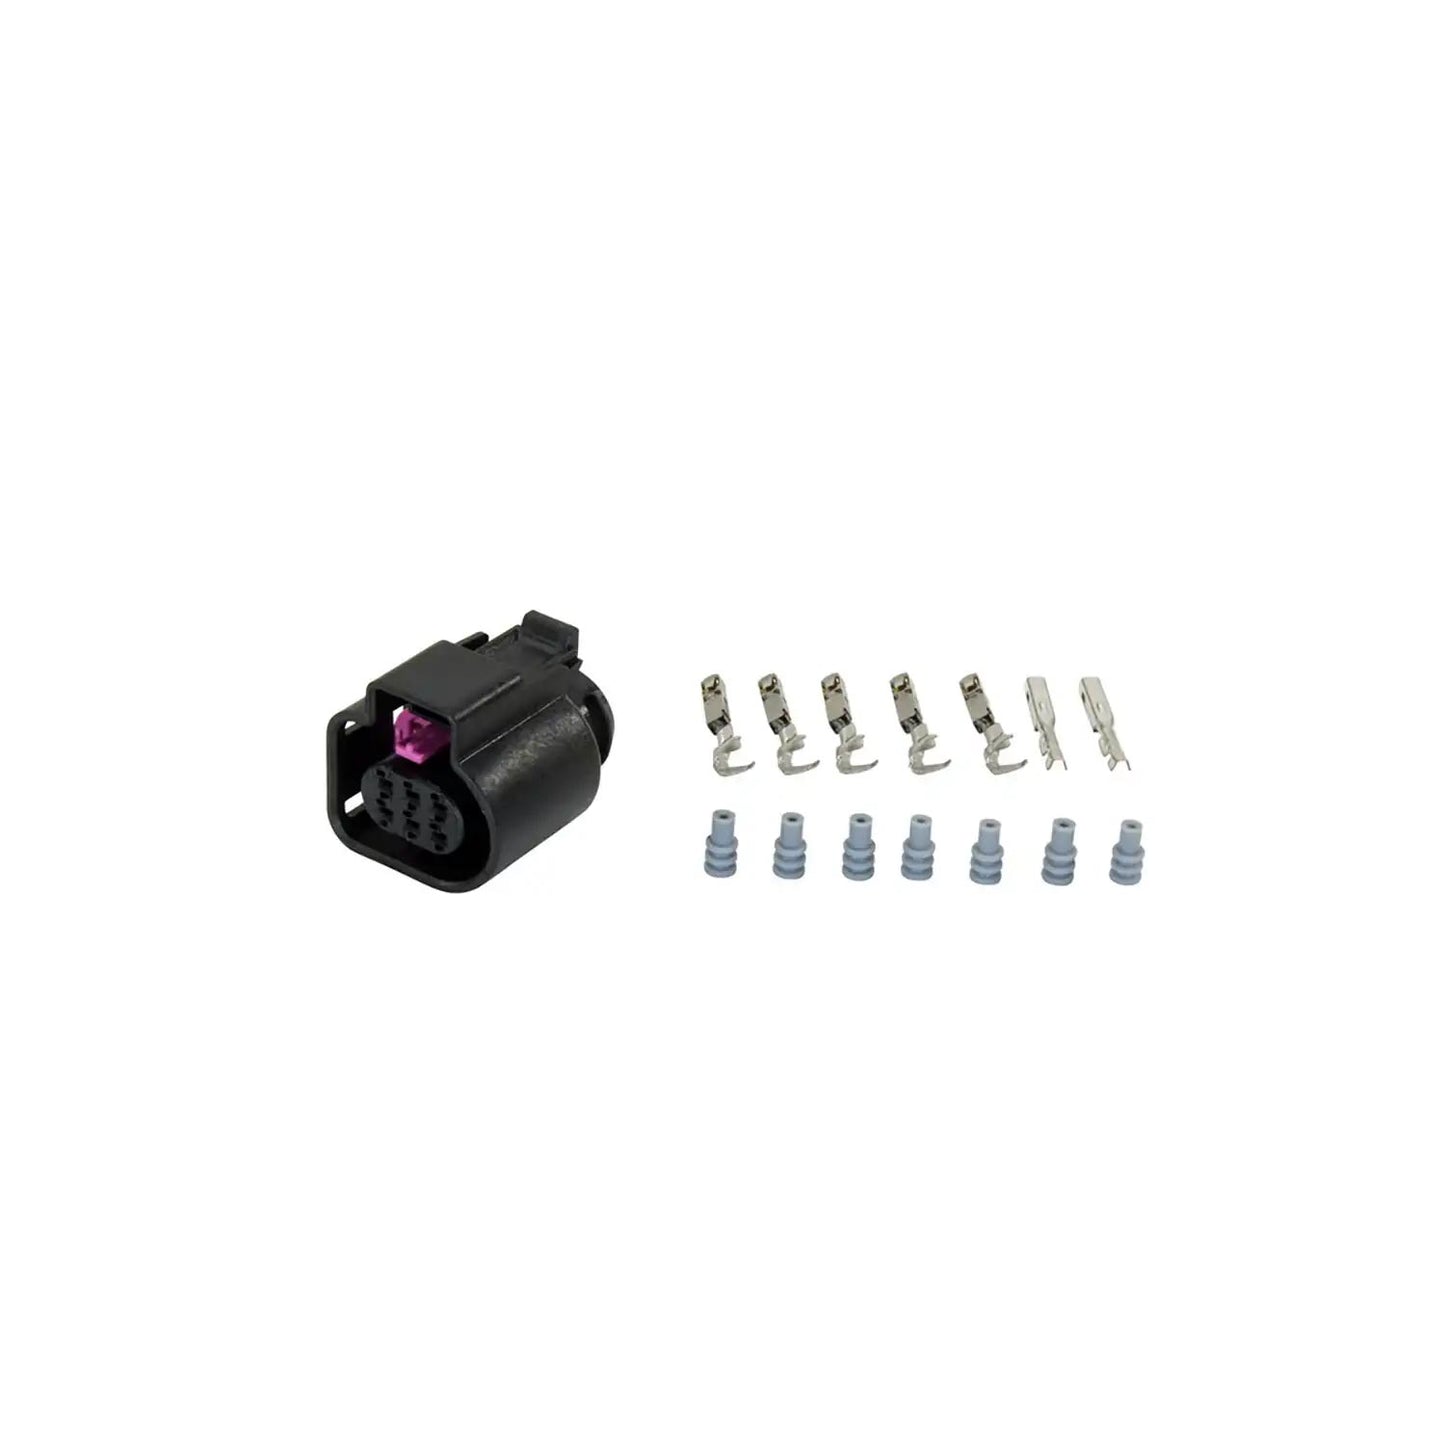 AEM Bosch Lsu 4 9 Wideband Connector Kit For 30-4110